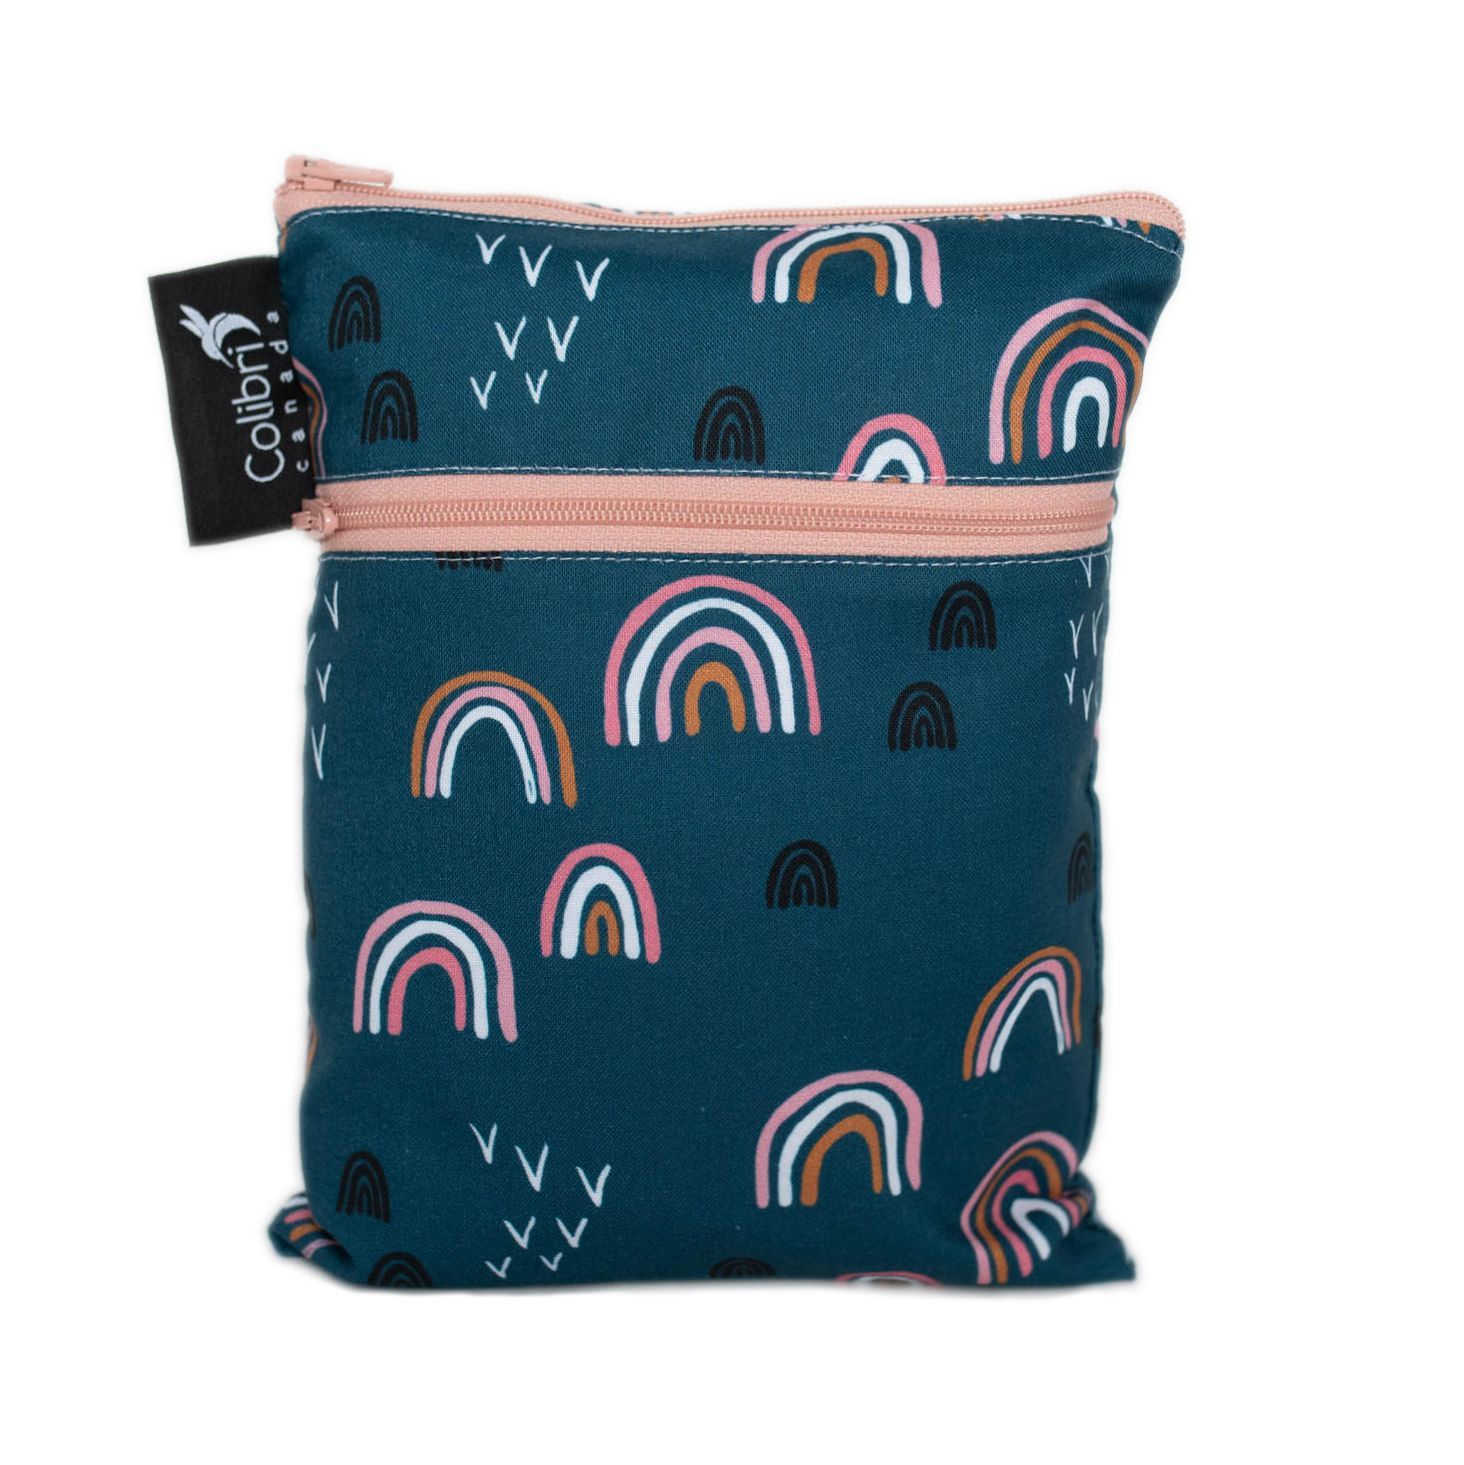 Purse Wetbags - Colibri Rainbow Dual Pocket Purse Sized Wet Bag